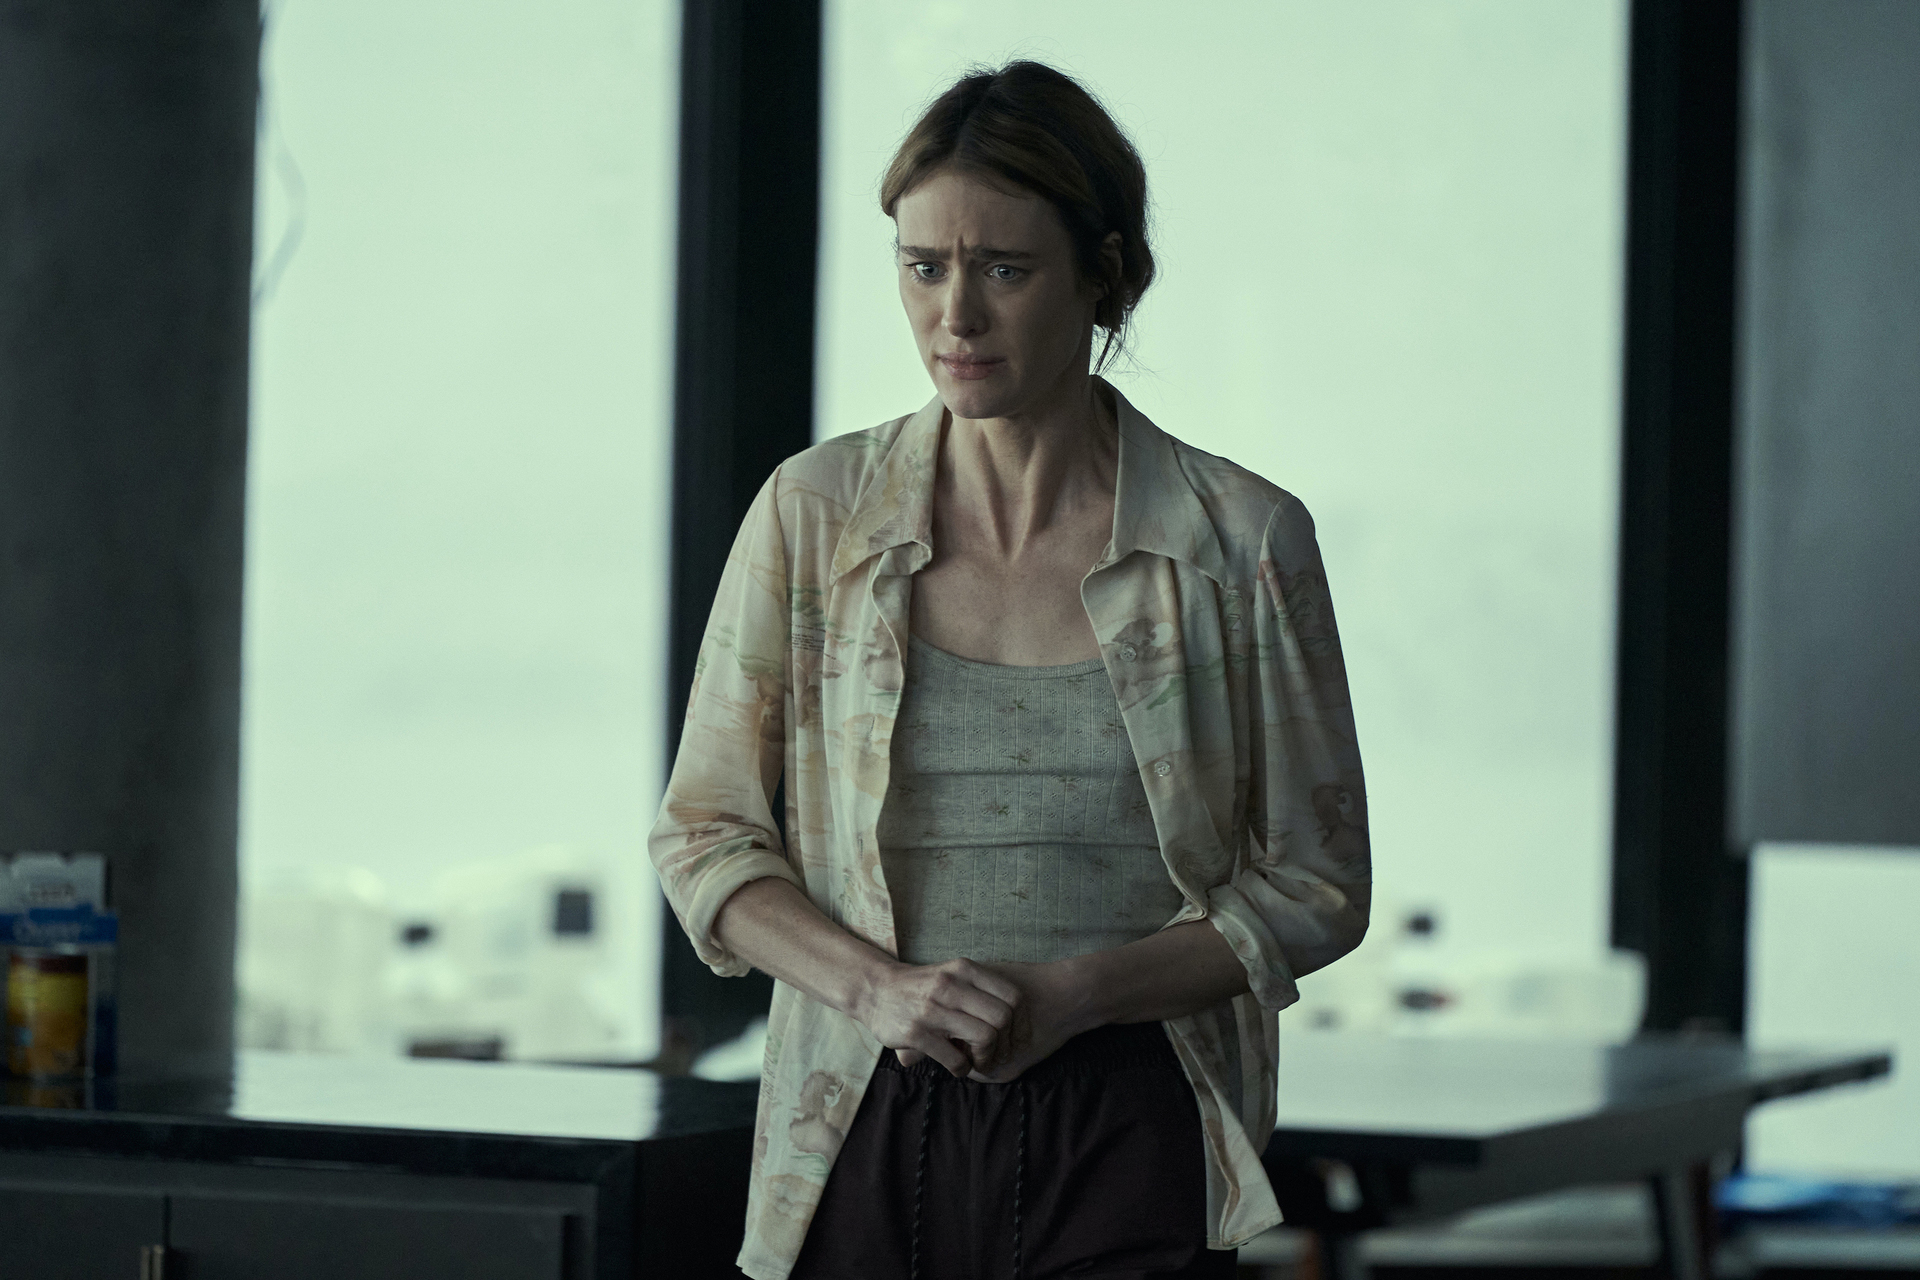 MacKenzie Davis as Kirsten from HBO's "Station Eleven"